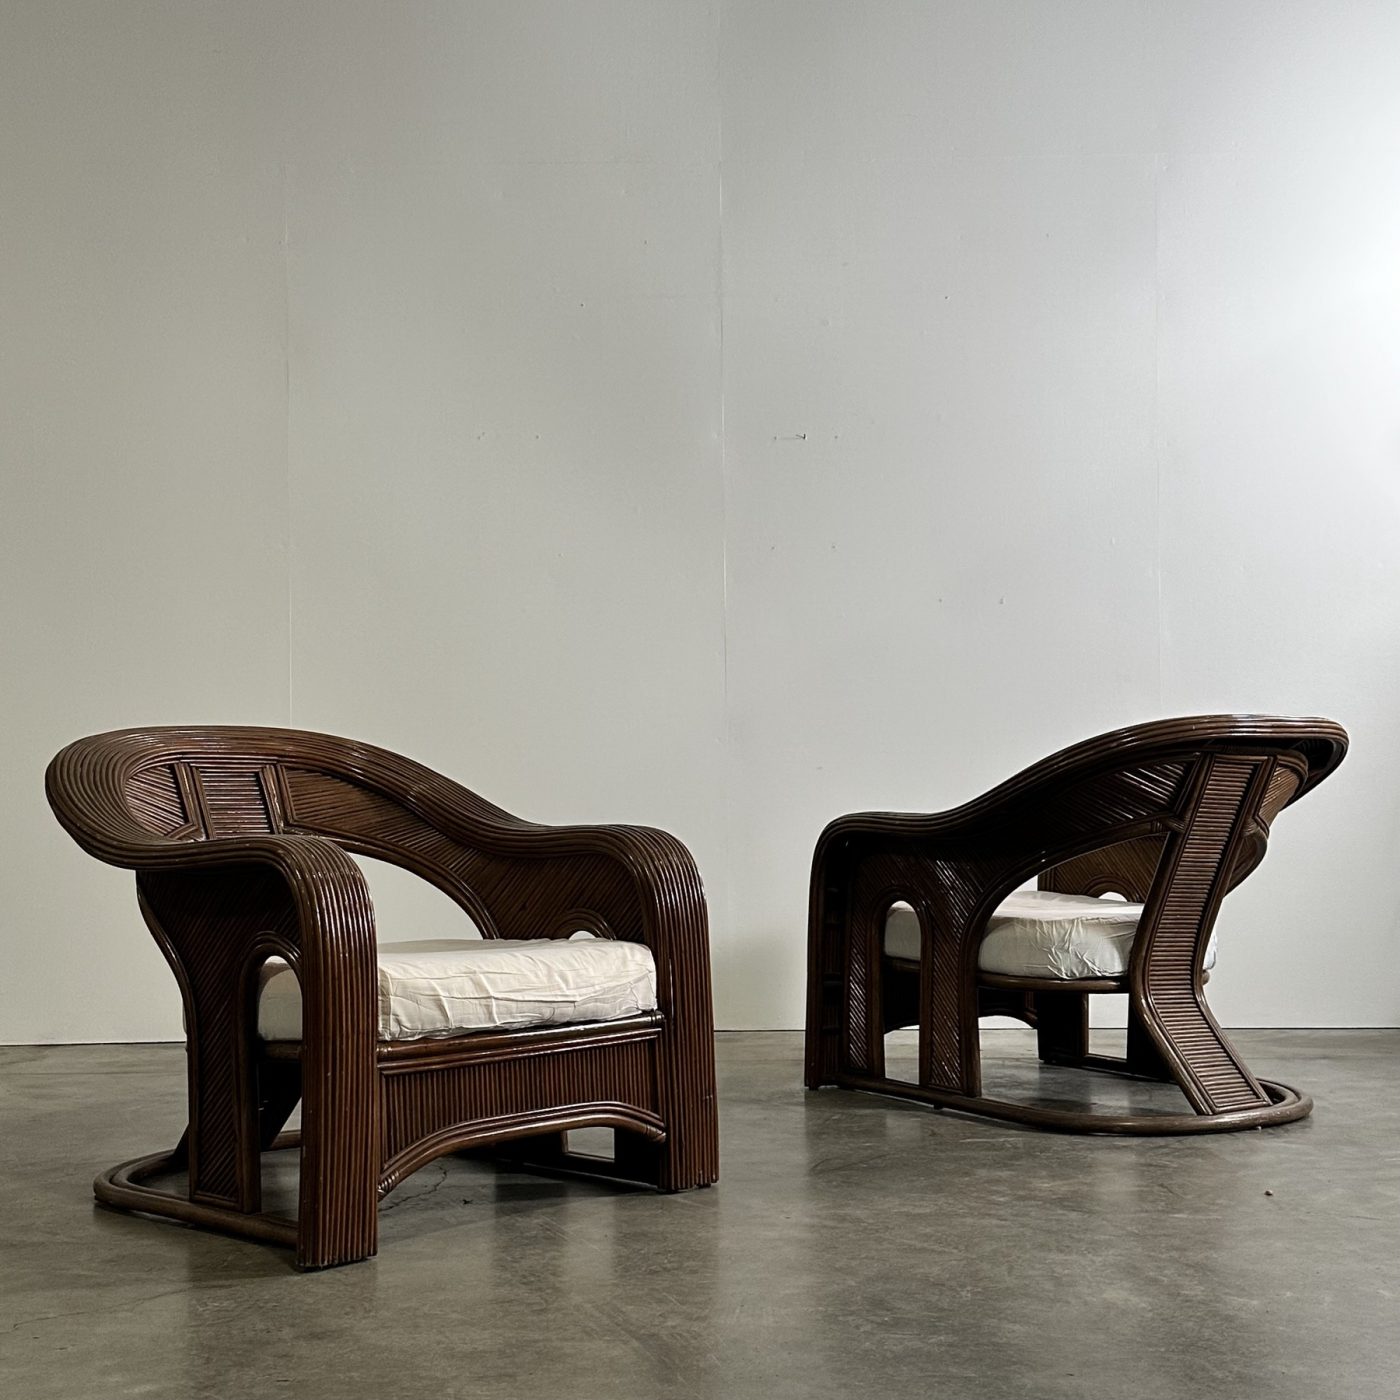 objet-vagabond-rattan-armchairs0006